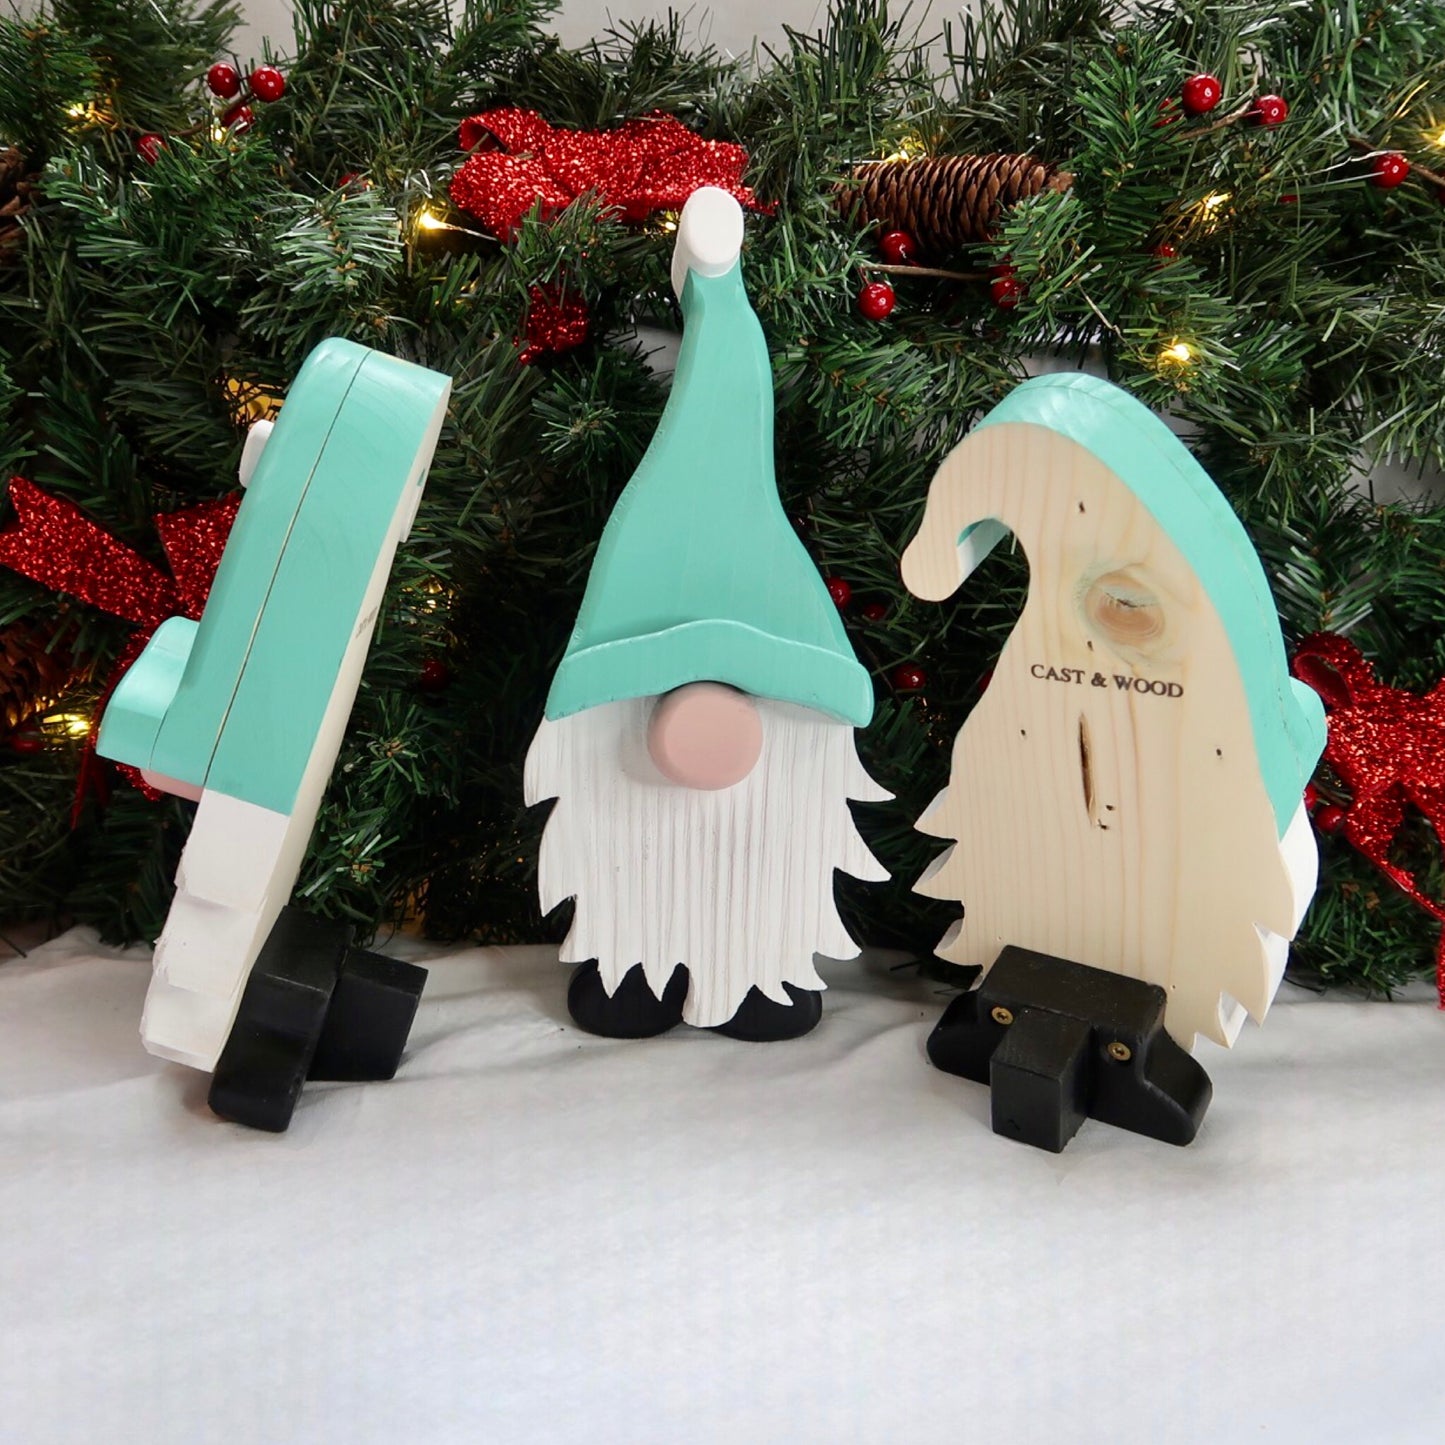 Festive Gonk - Handmade Decorative Wooden Gnome - Oldschool Teal